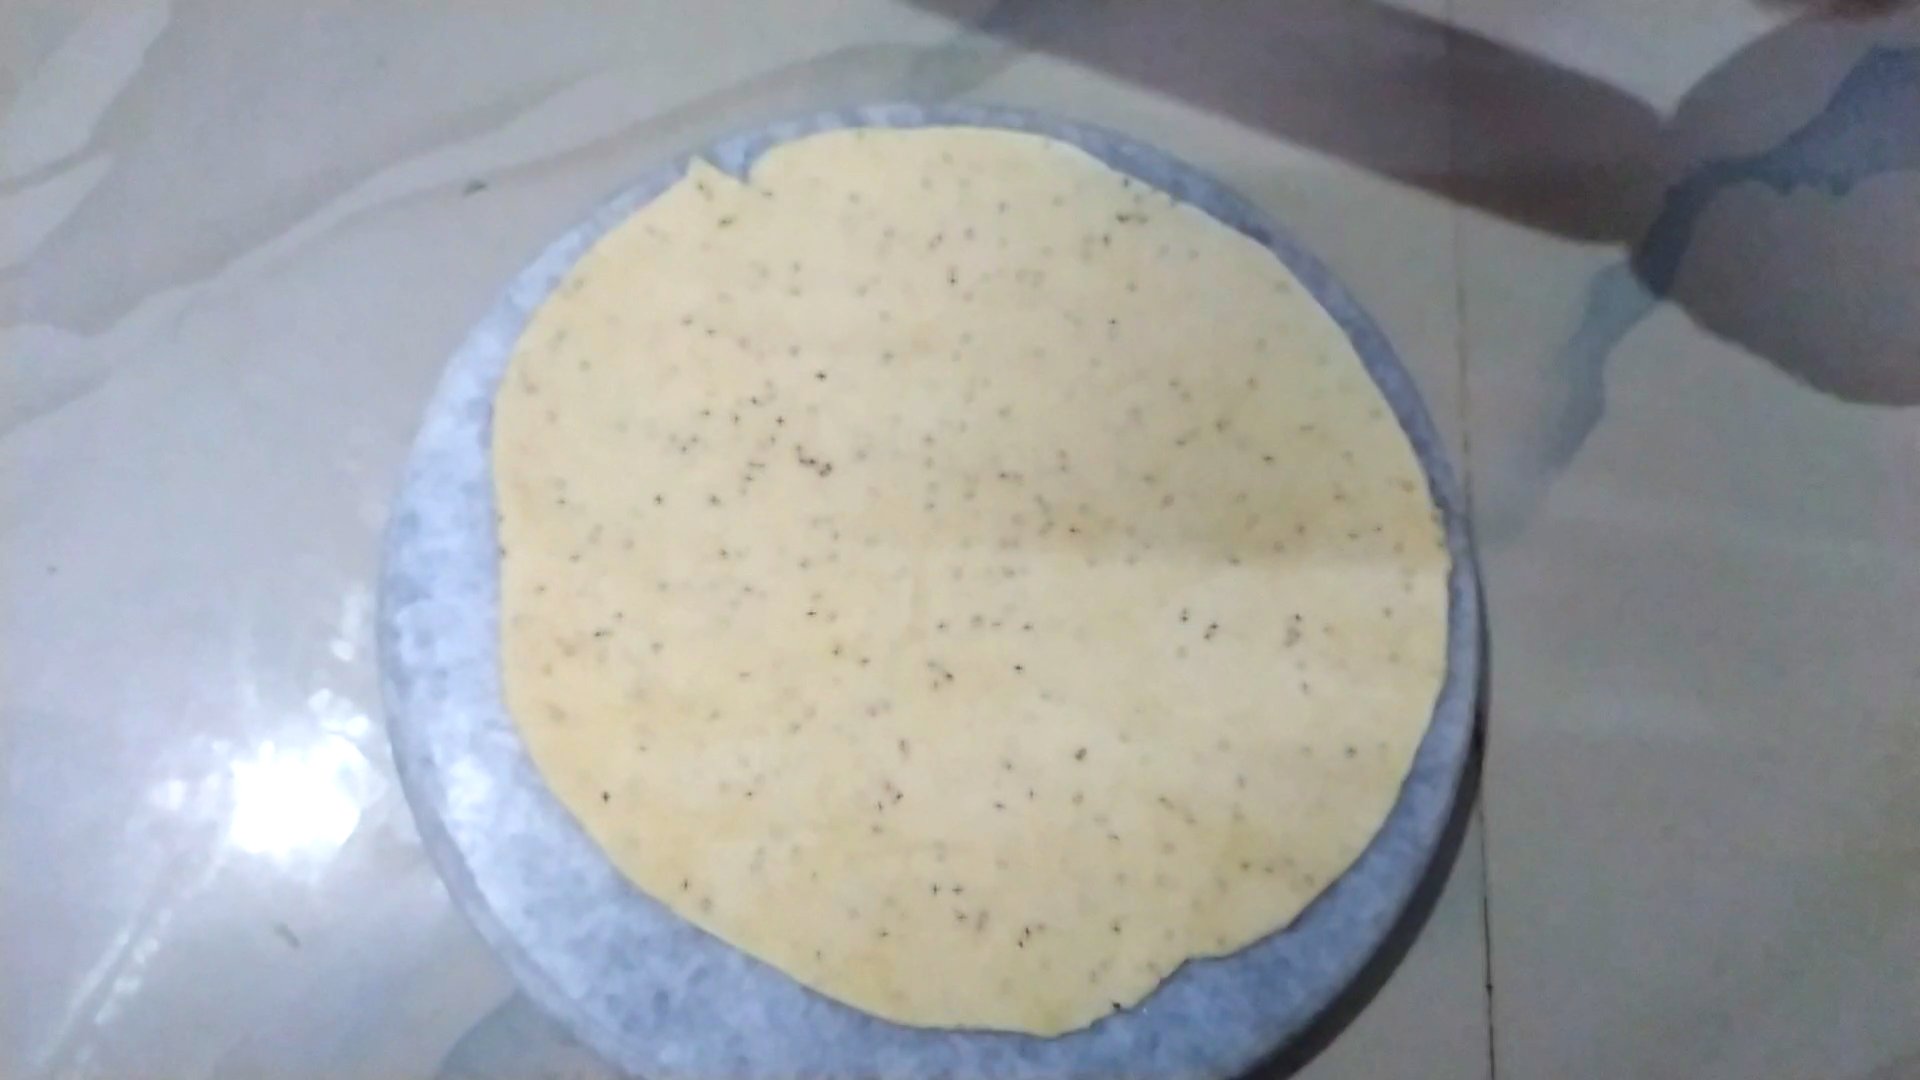 Golgappa puri recipe | puri recipe for panipuri | how to make puchka for panipuri | suji golgappe ki puri recipe